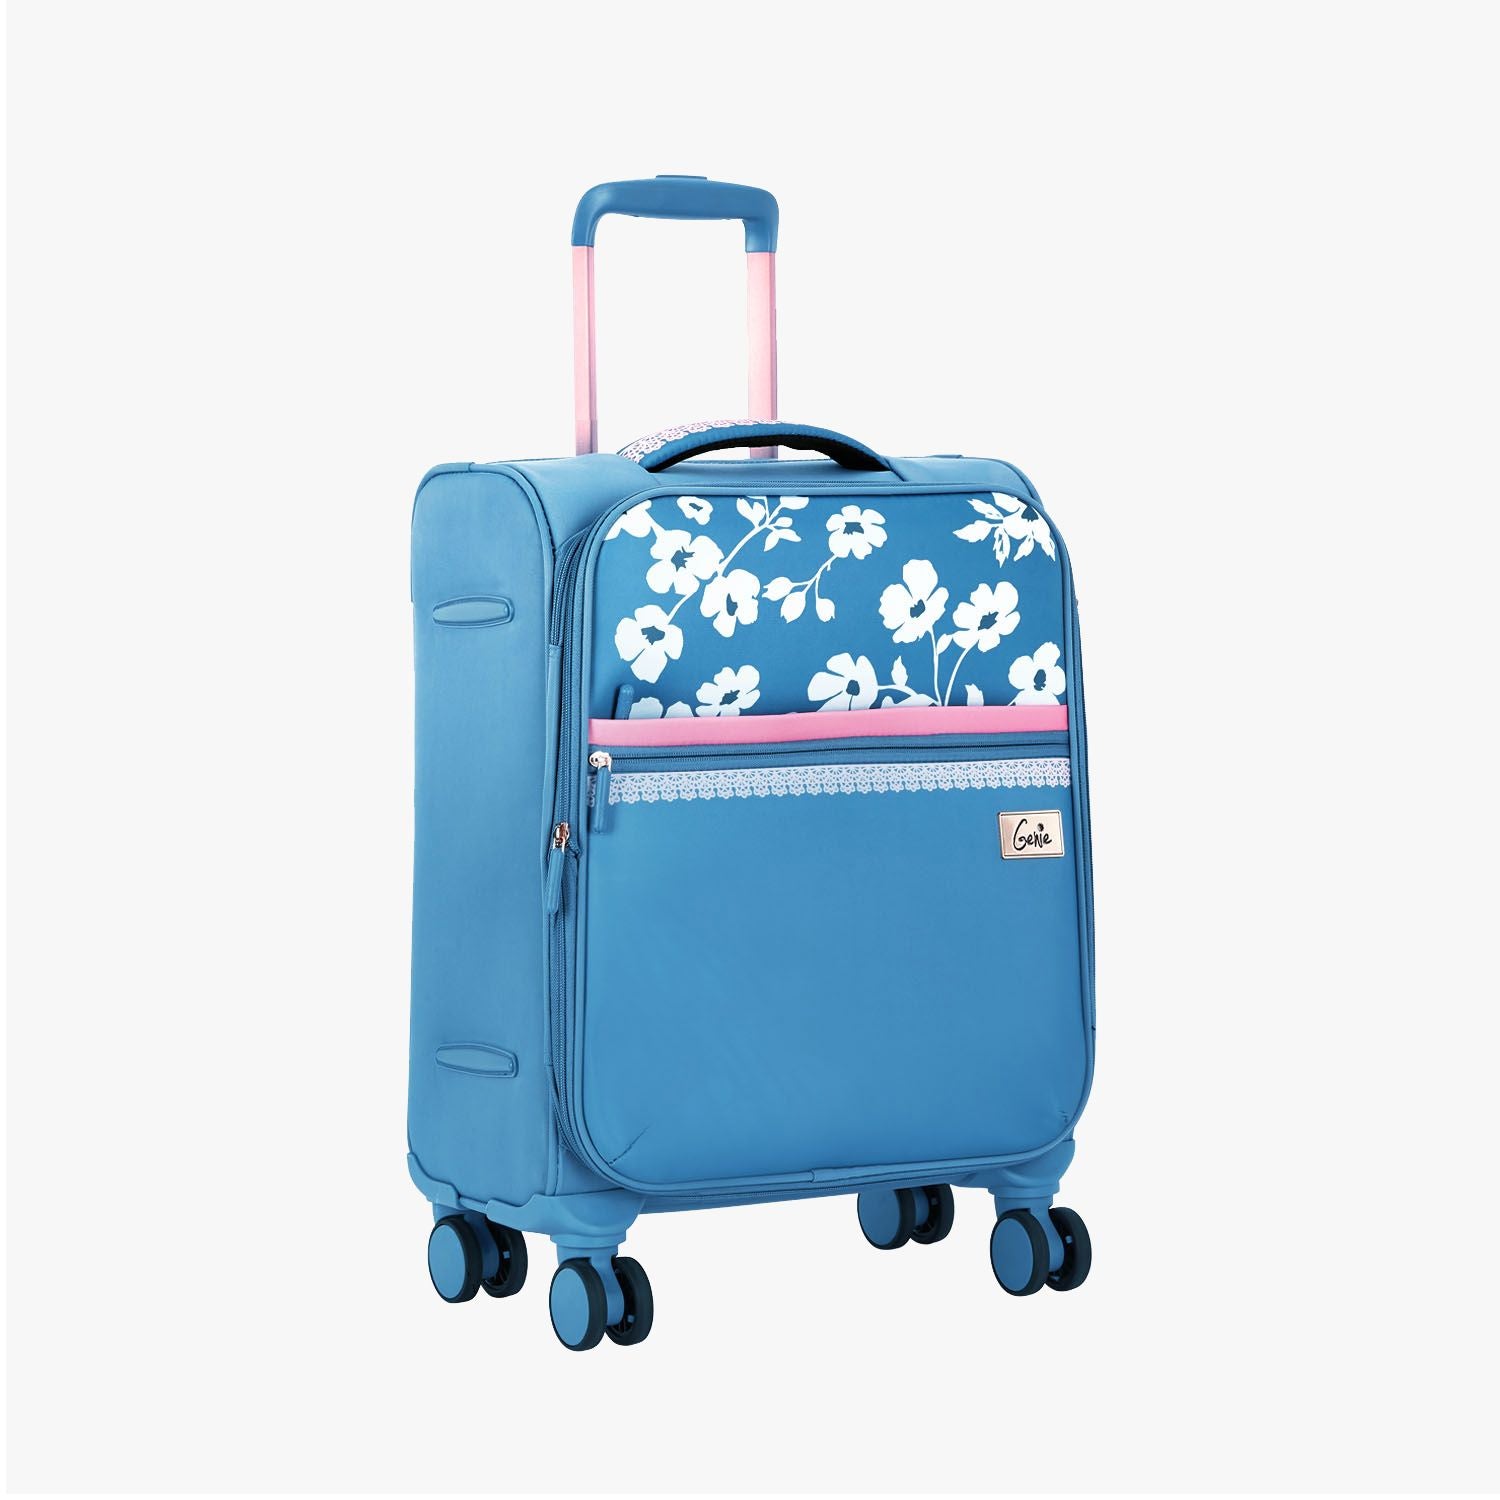 Paramour Small, Medium and Large Soft luggage Combo Set - Blue